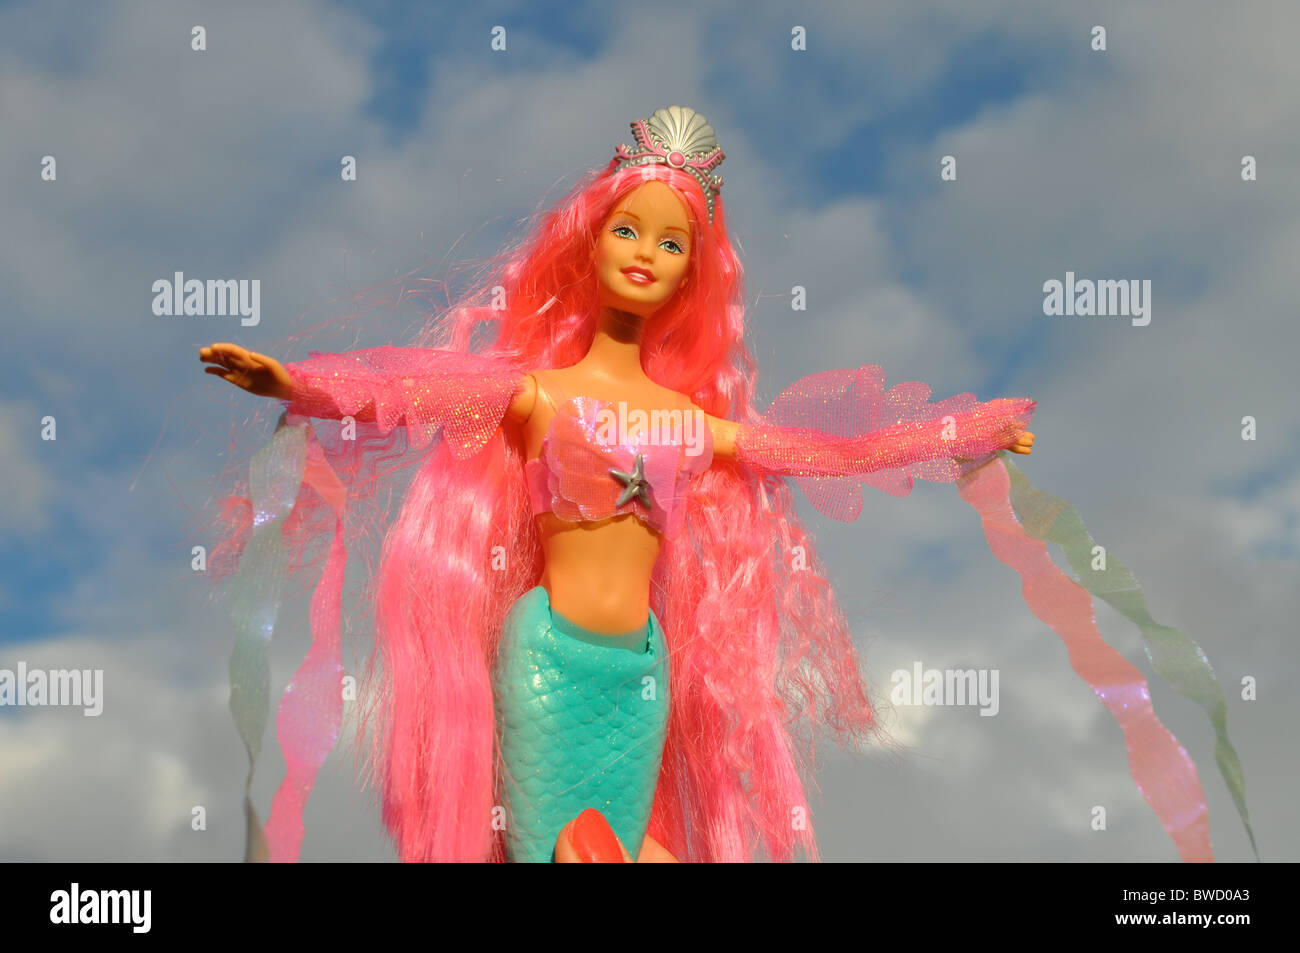 Mermaid Fantasy Barbie doll 2002 by Mattel Inc Stock Photo - Alamy